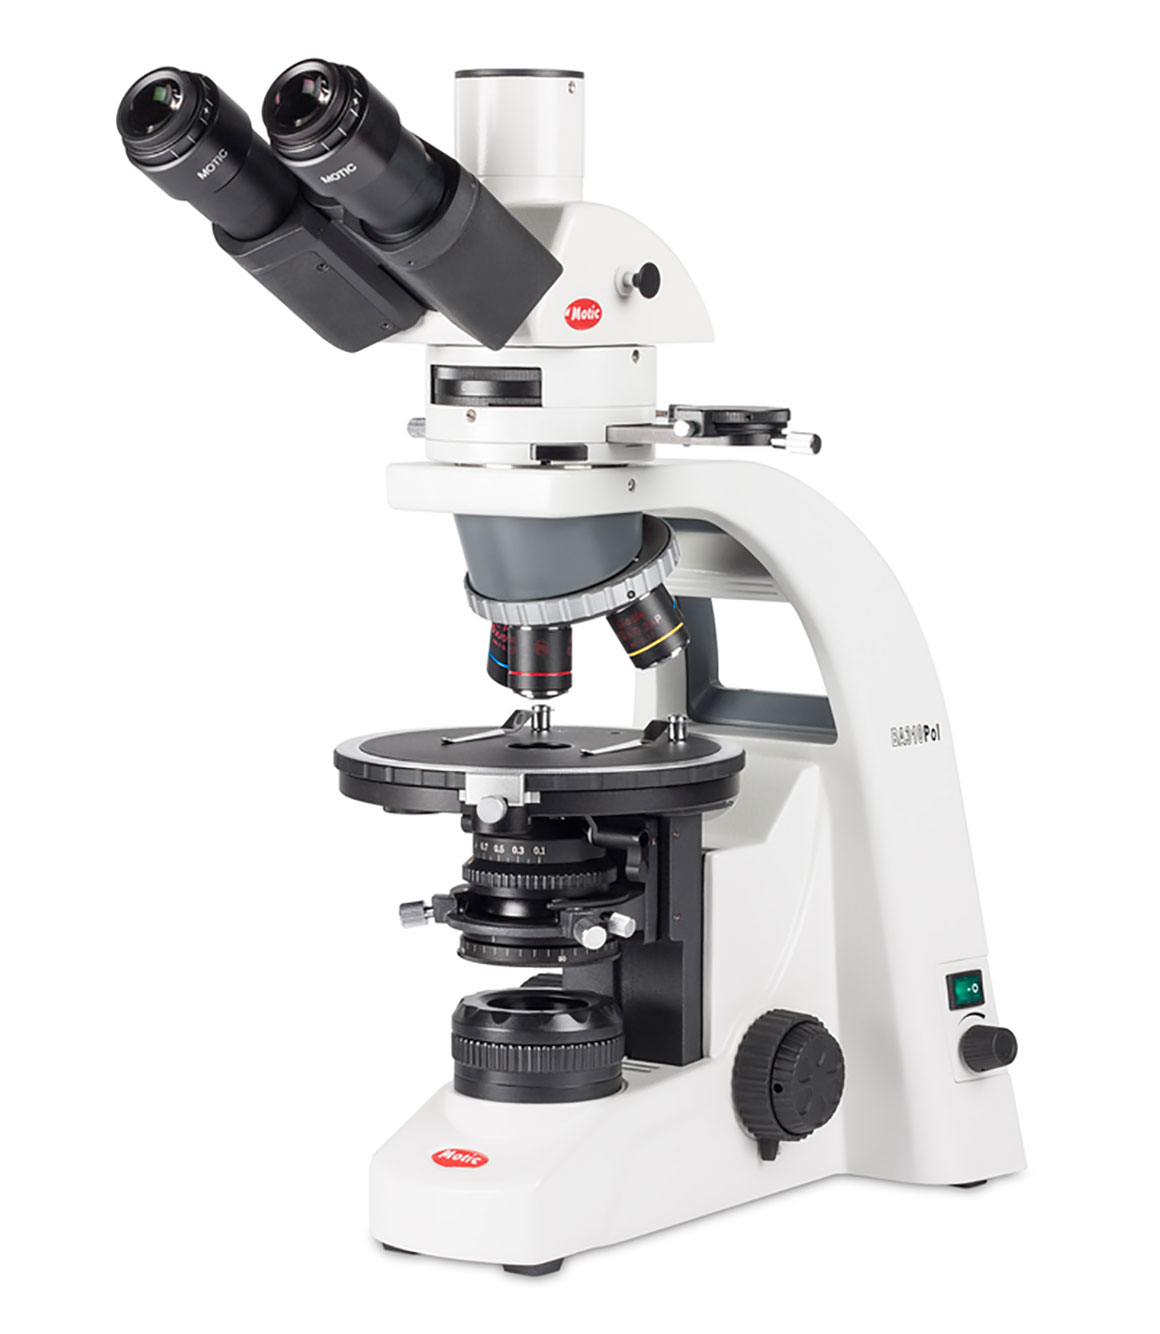 Motic BA310 Polarizing microscope shown with trinocular head